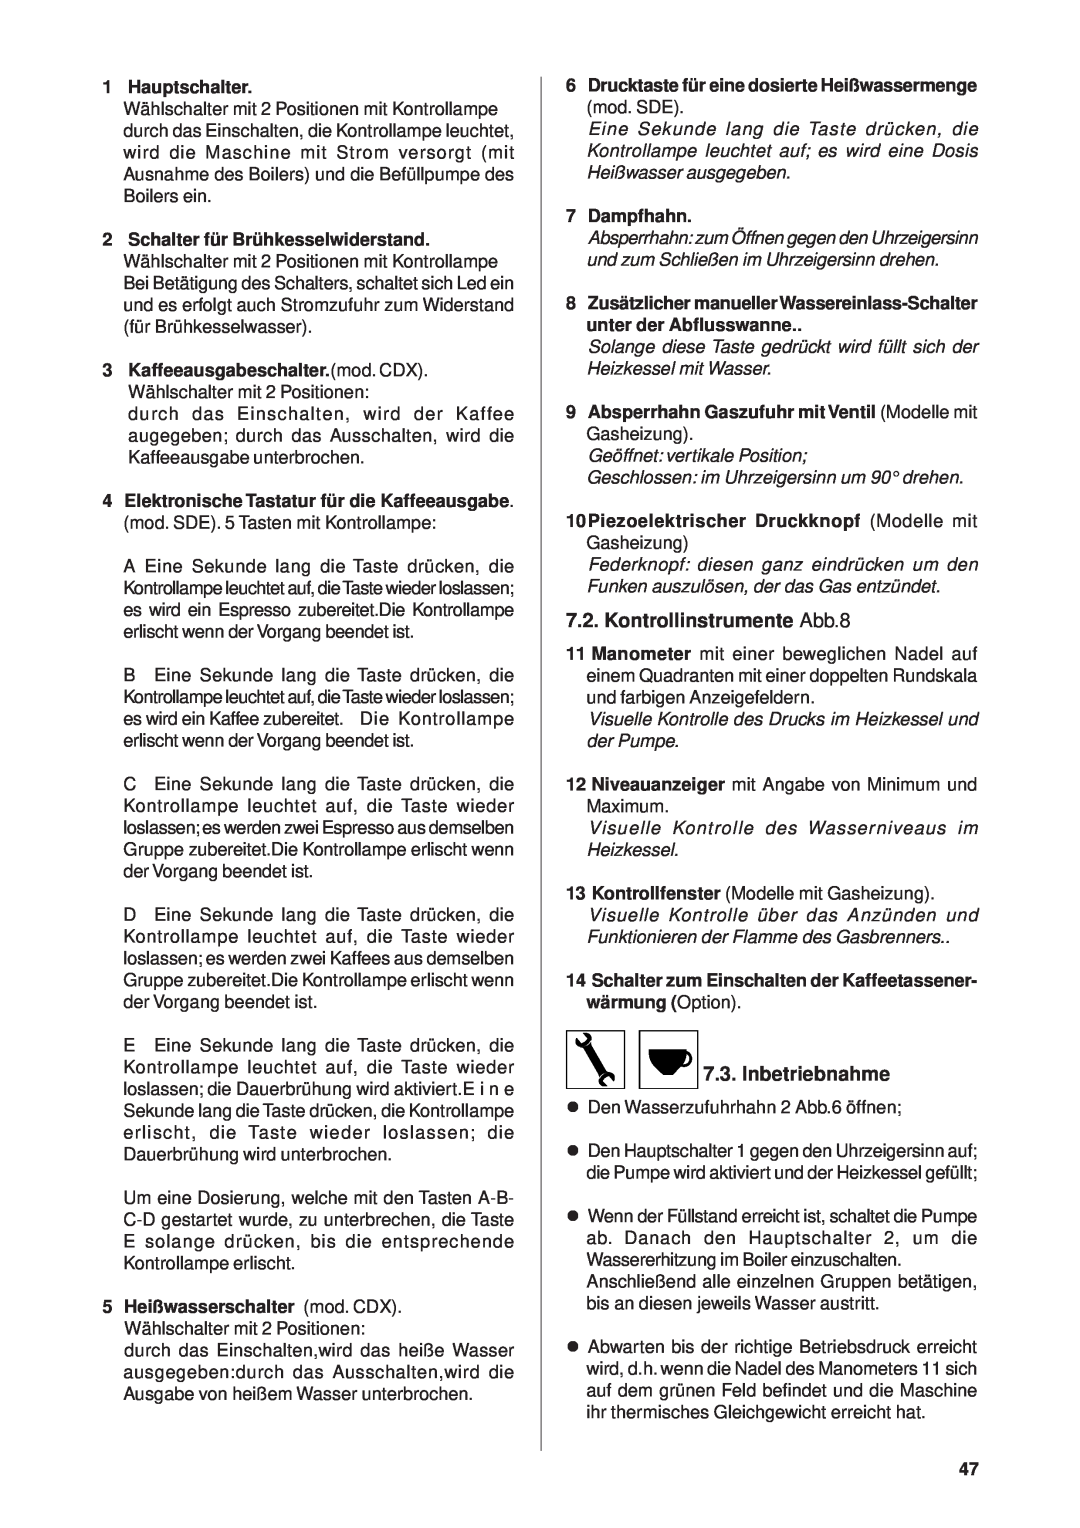 Rancilio Millennium manual Kontrollinstrumente Abb.8, Inbetriebnahme 